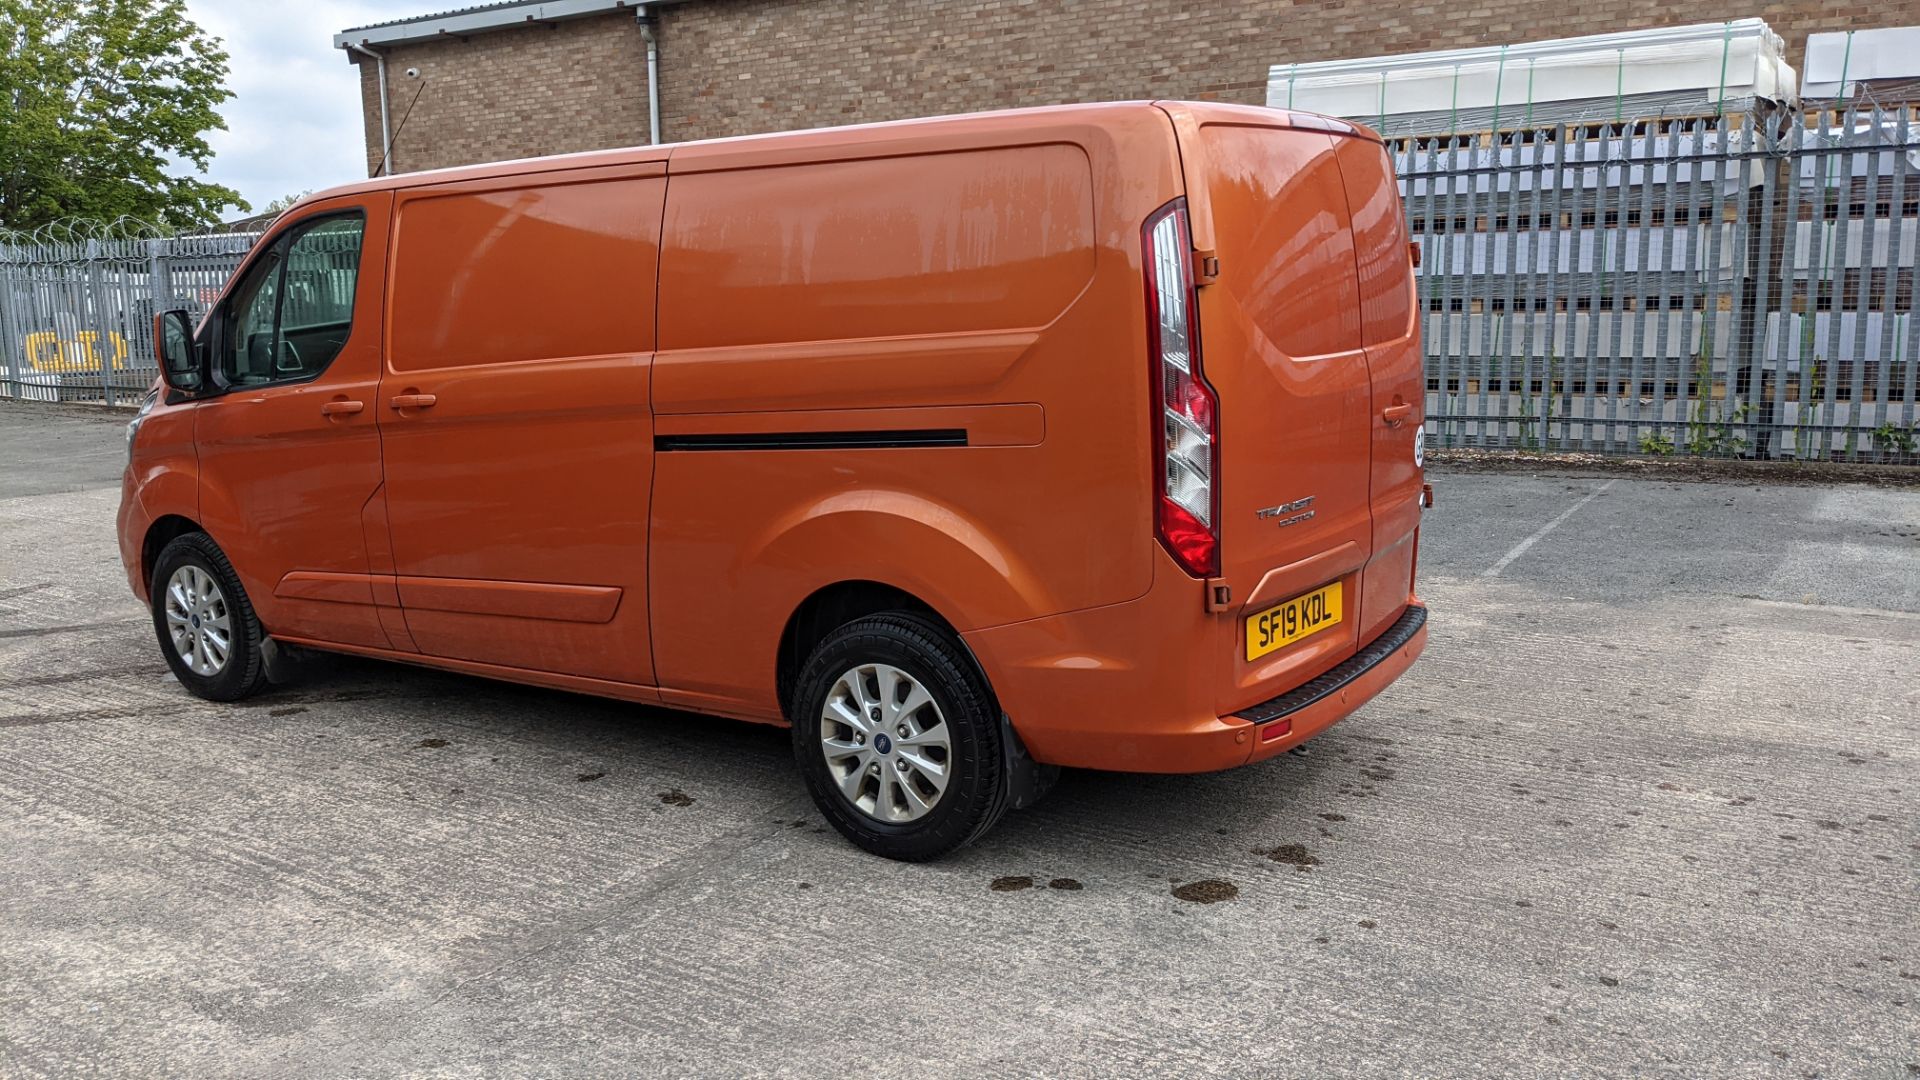 2019 Ford Transit Custom 300 L2 van, Orange Glow. High spec: Heated seats, air con, parking sensors - Image 14 of 66